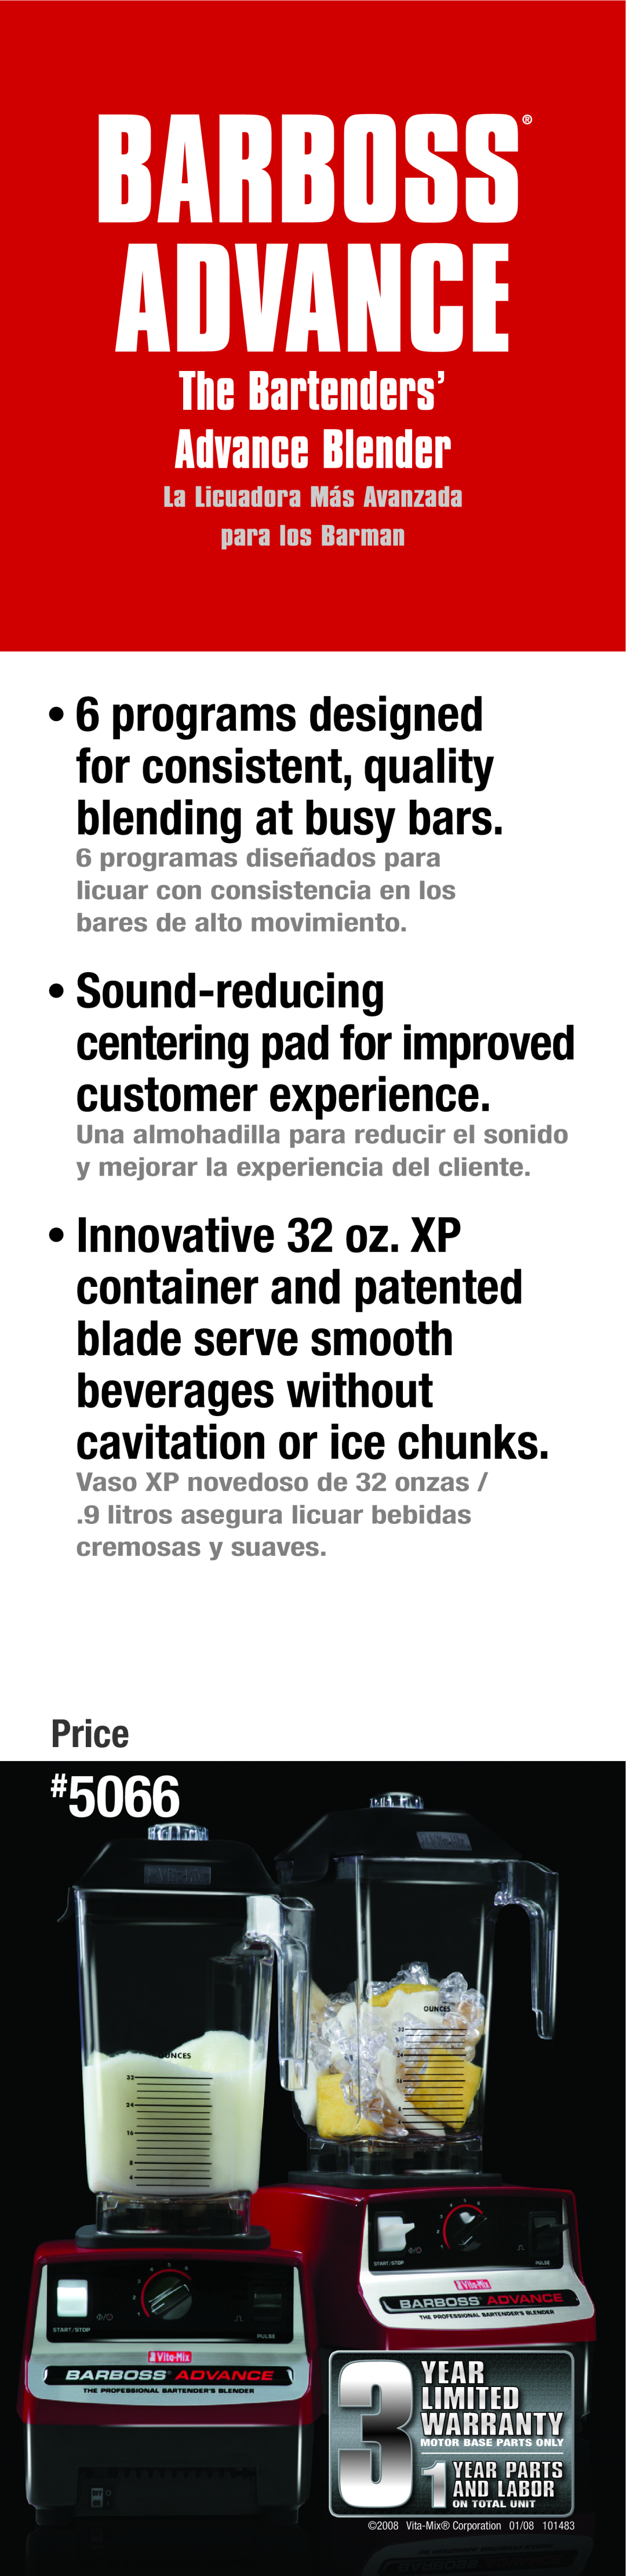 Vita-Mix manual BarBoss Advance, The Bartenders’, #5066, Advance Blender, blending at busy bars, customer experience 